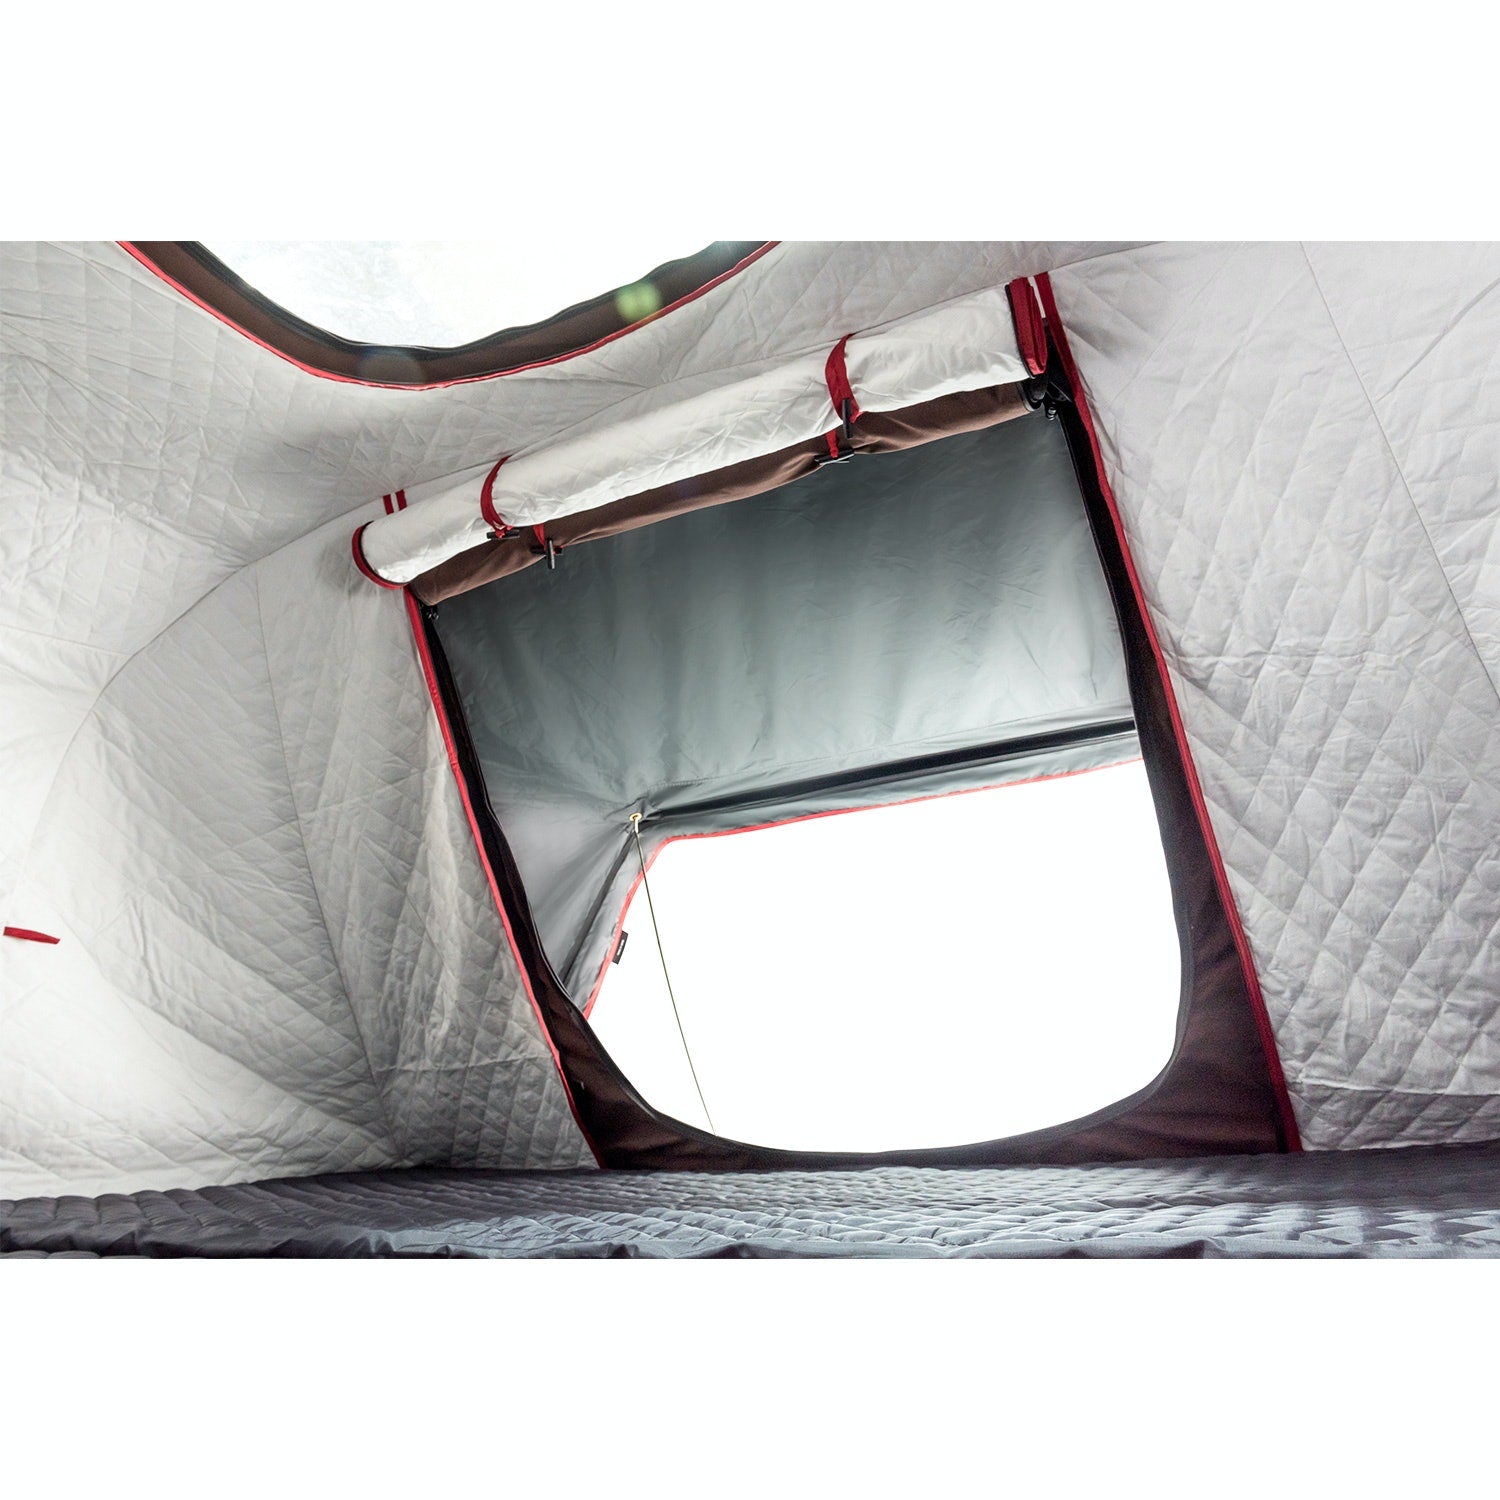 iKamper Skycamp 2x Insulation Tent